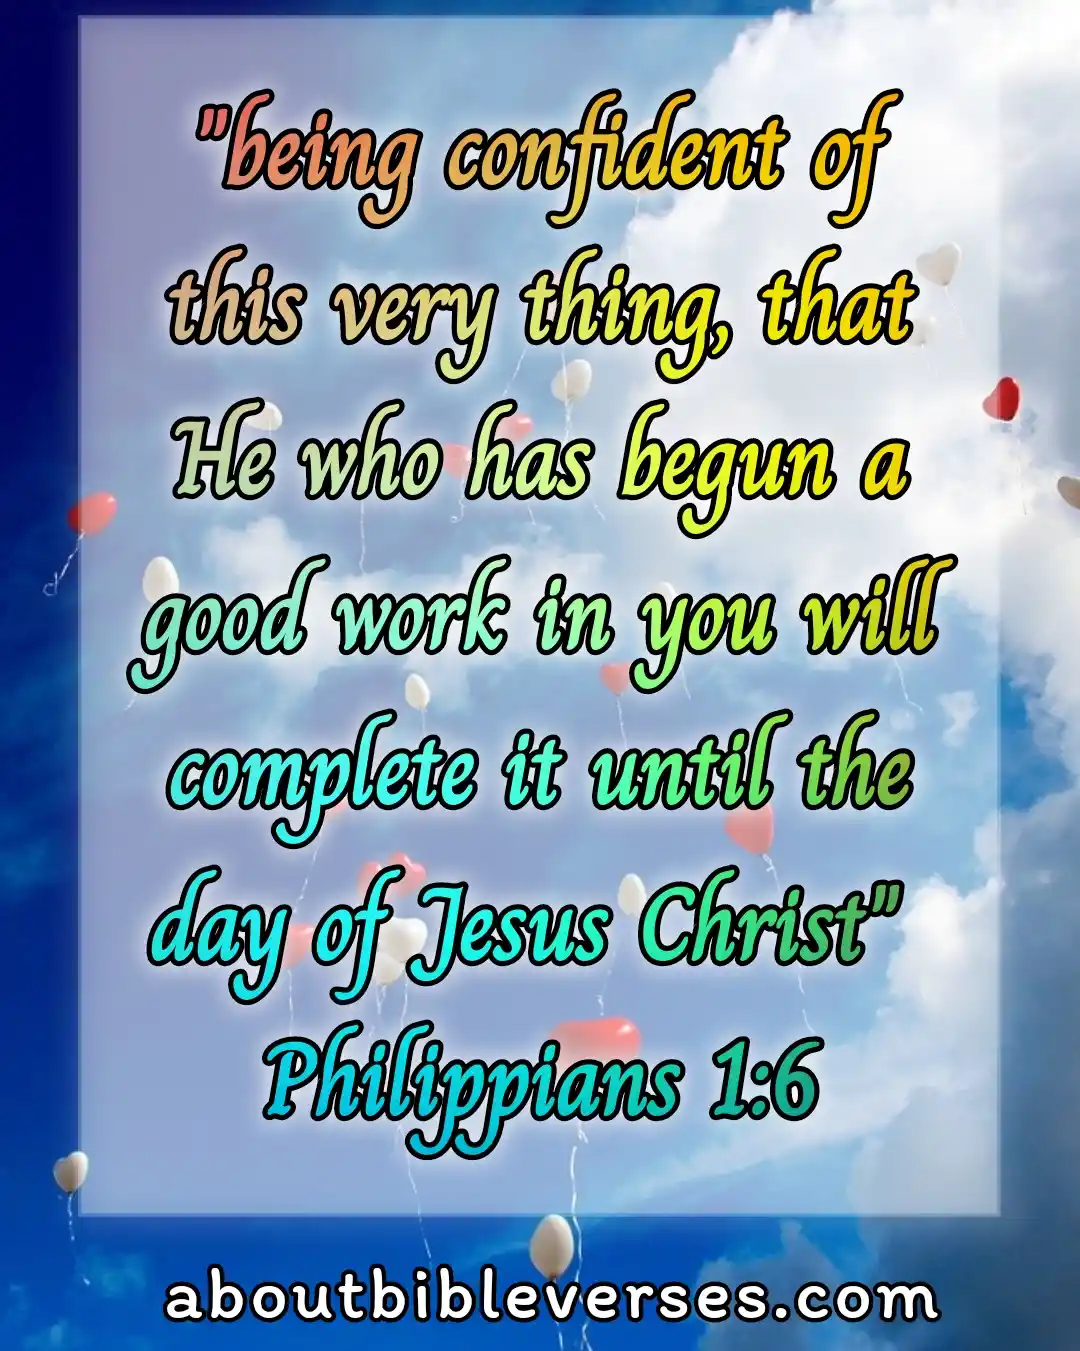 bible verses about God's provision (Philippians 1:6)